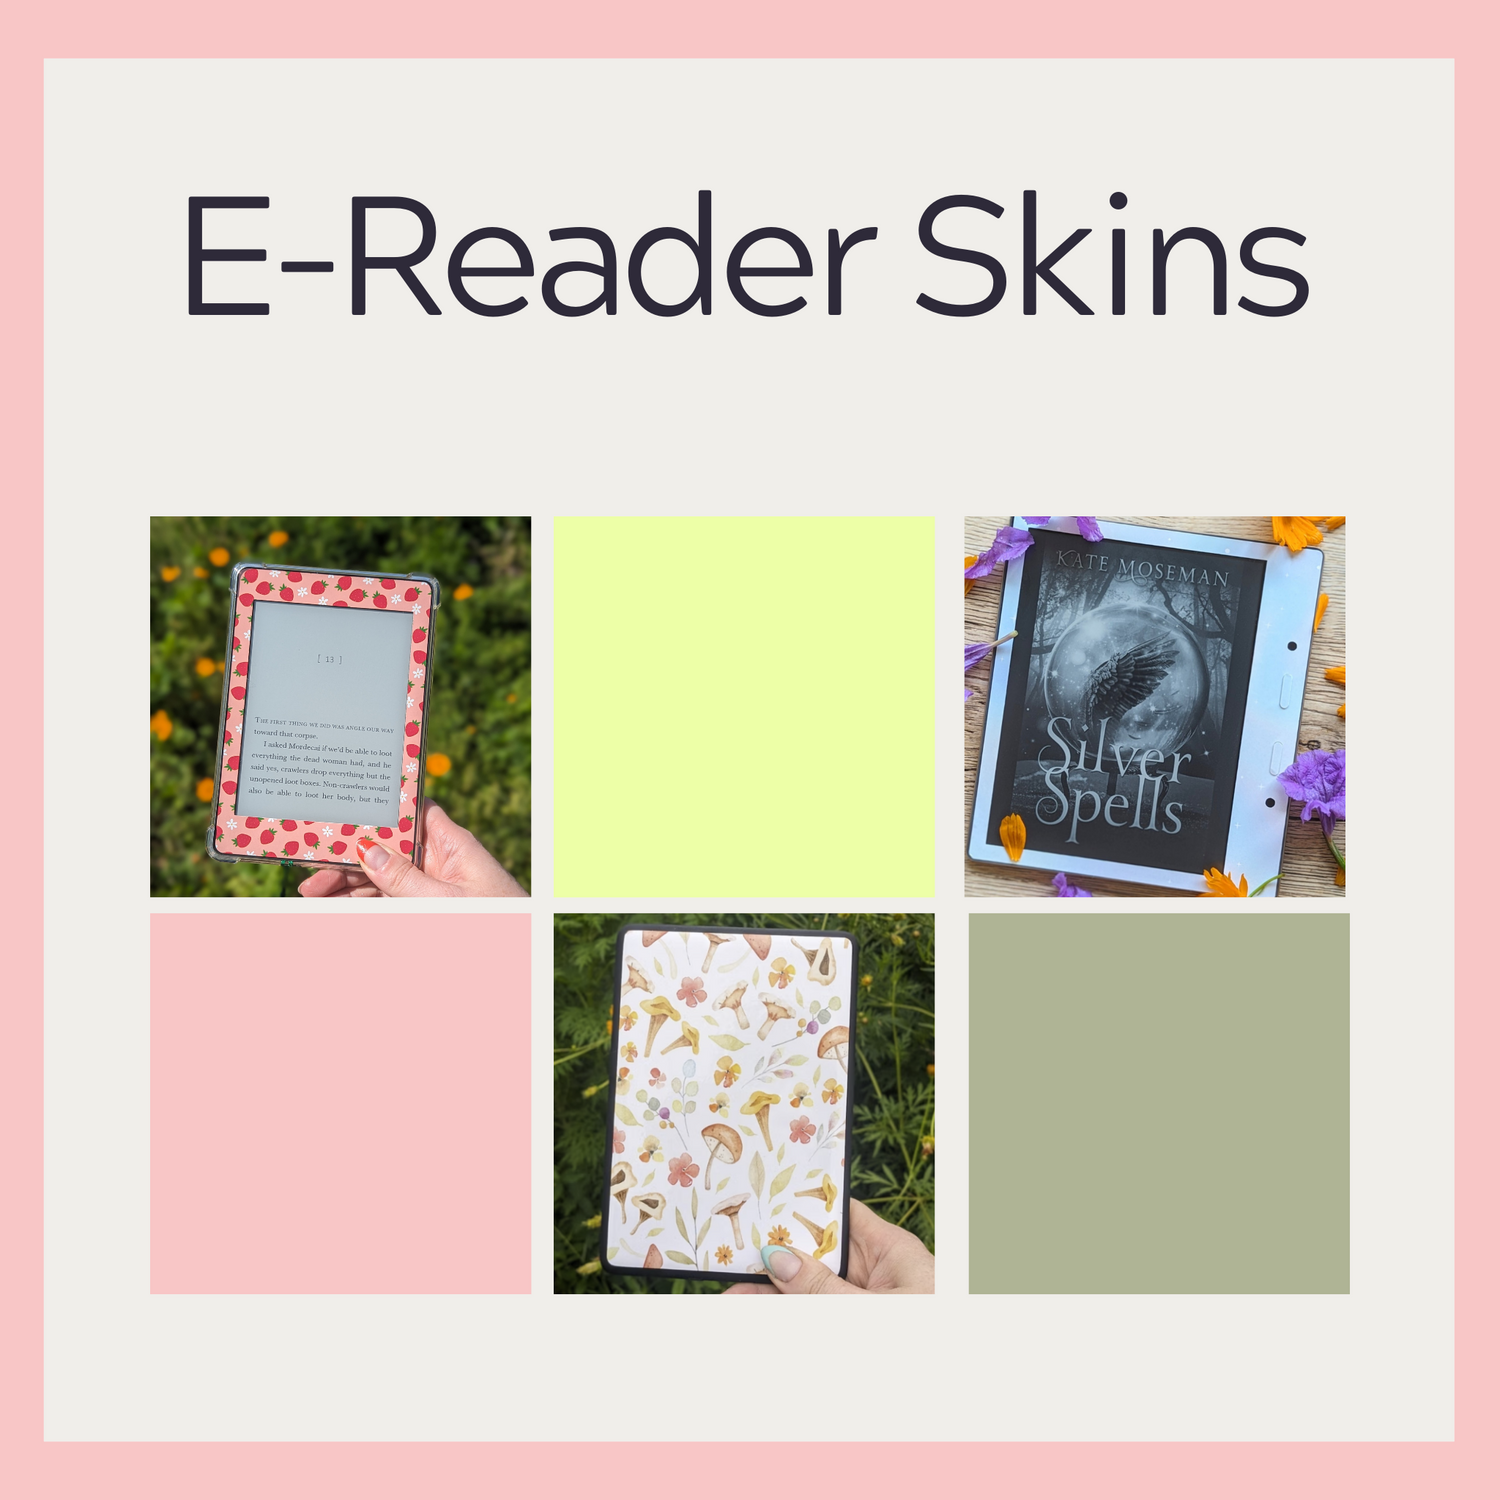 E-Reader Skins